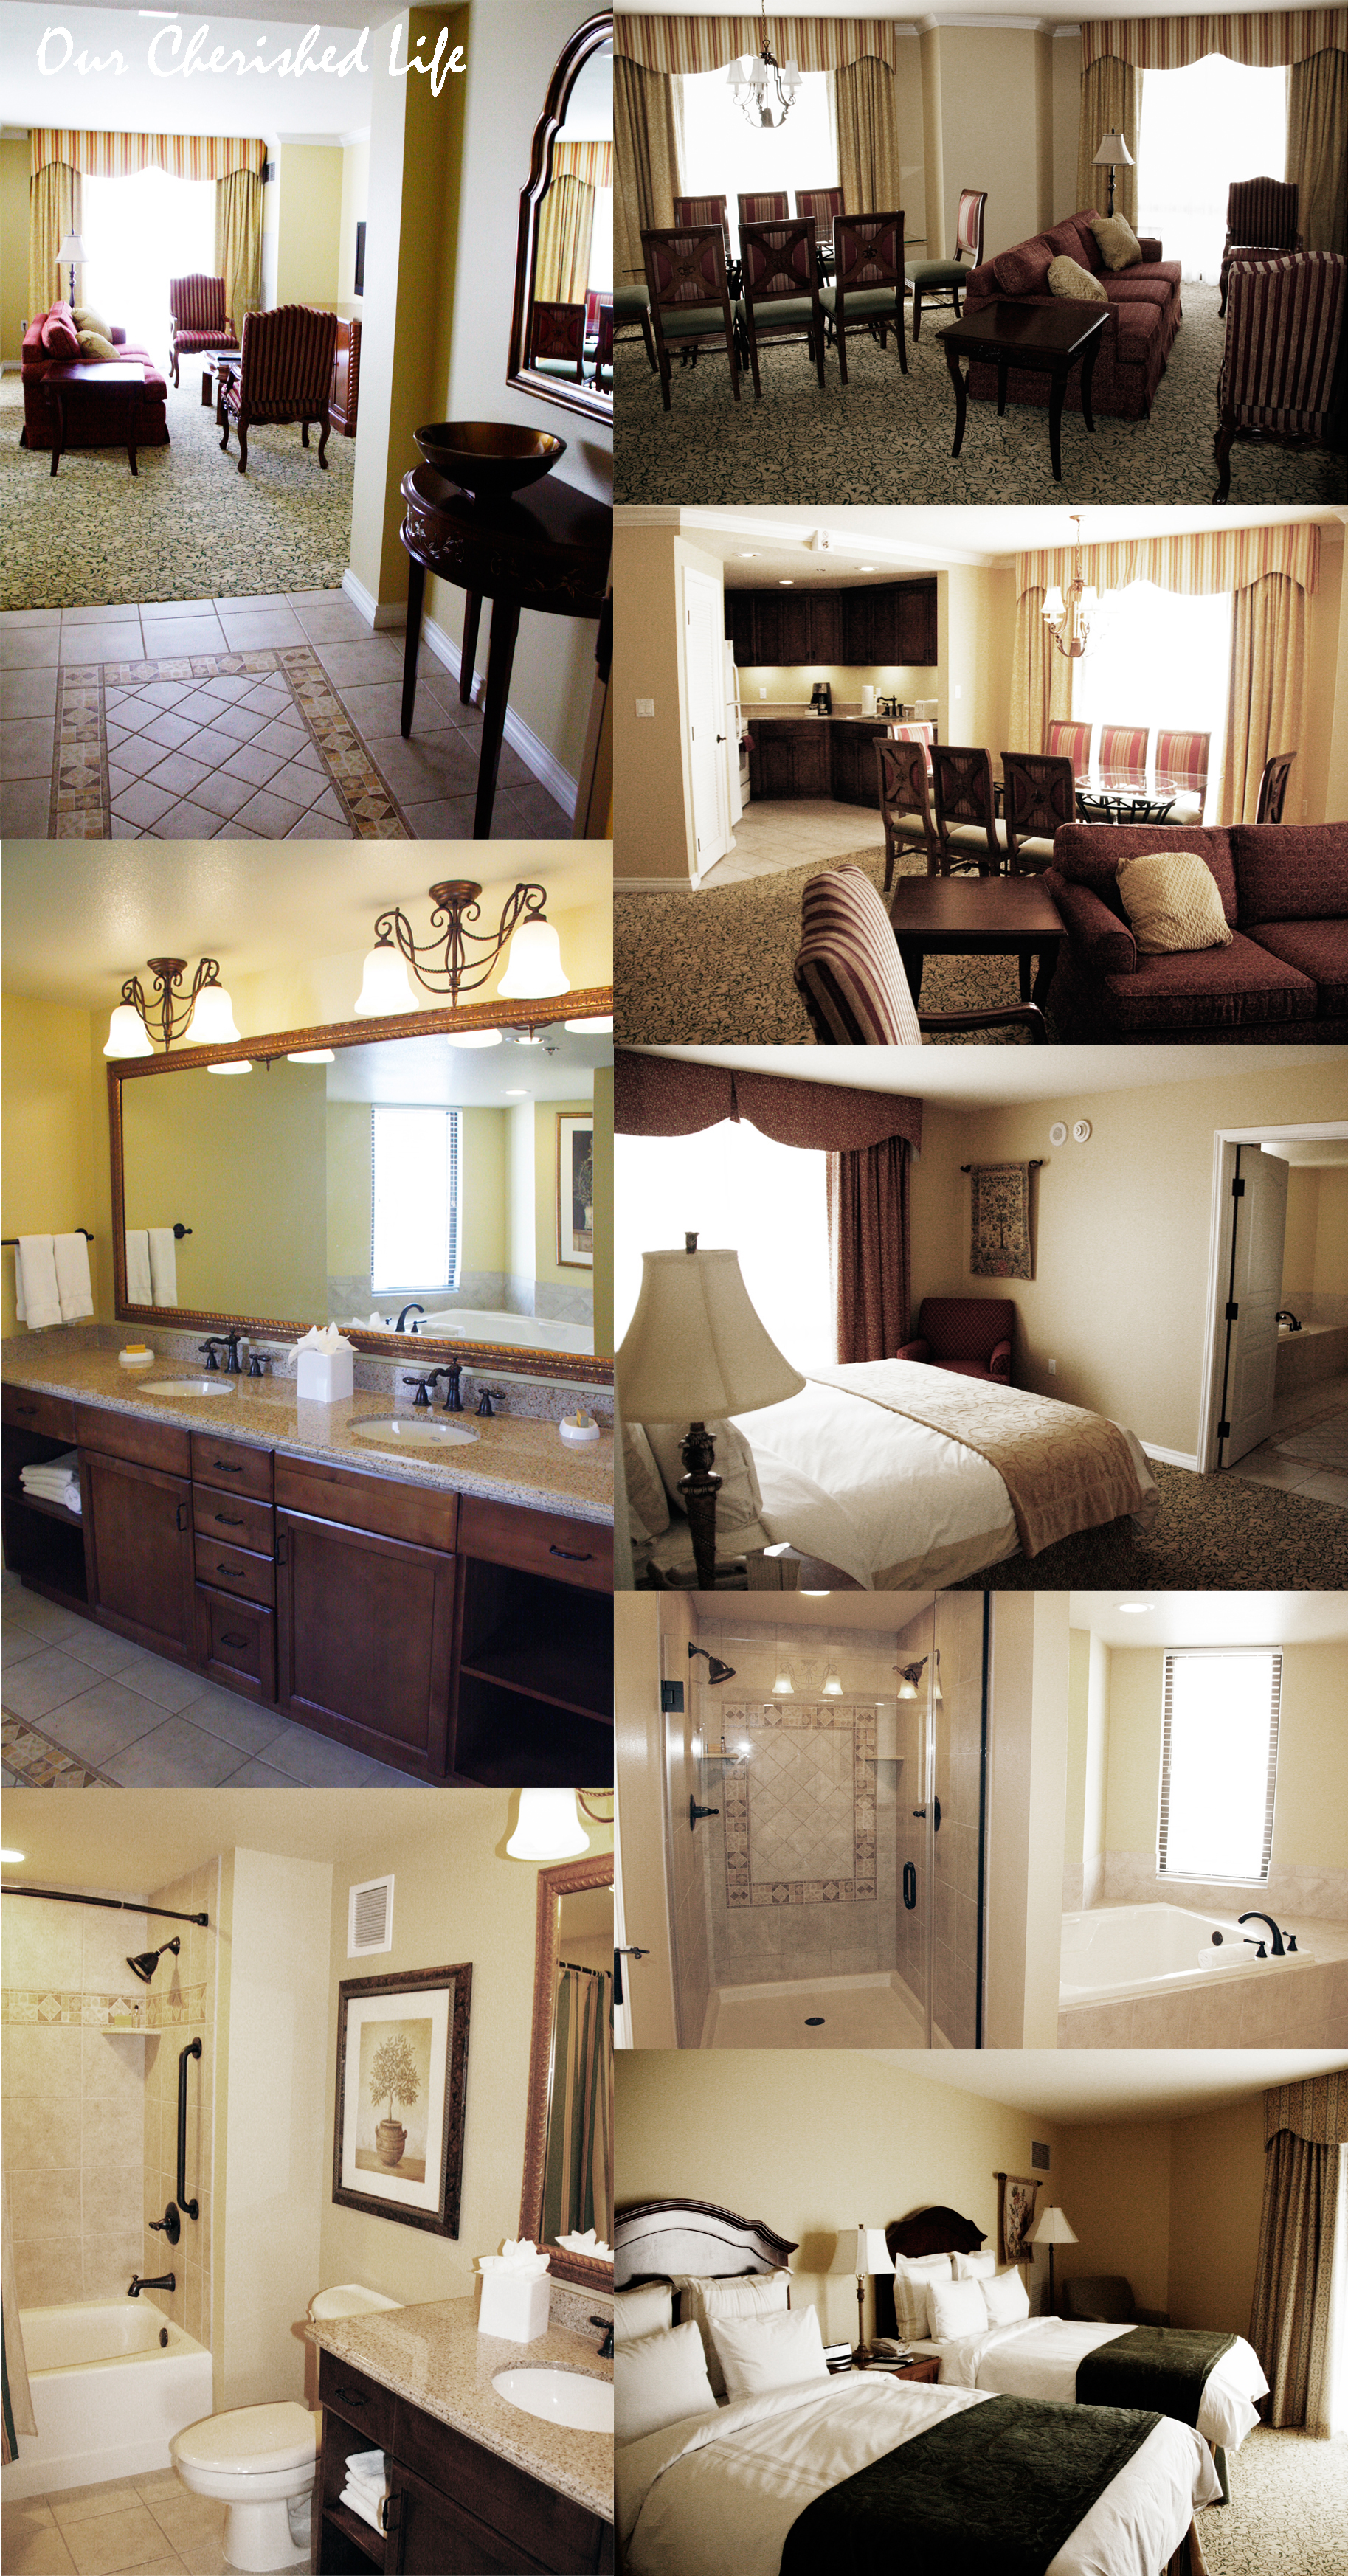 Marriott Grand Chateau One Bedroom Villa Room Tour - Las Vegas